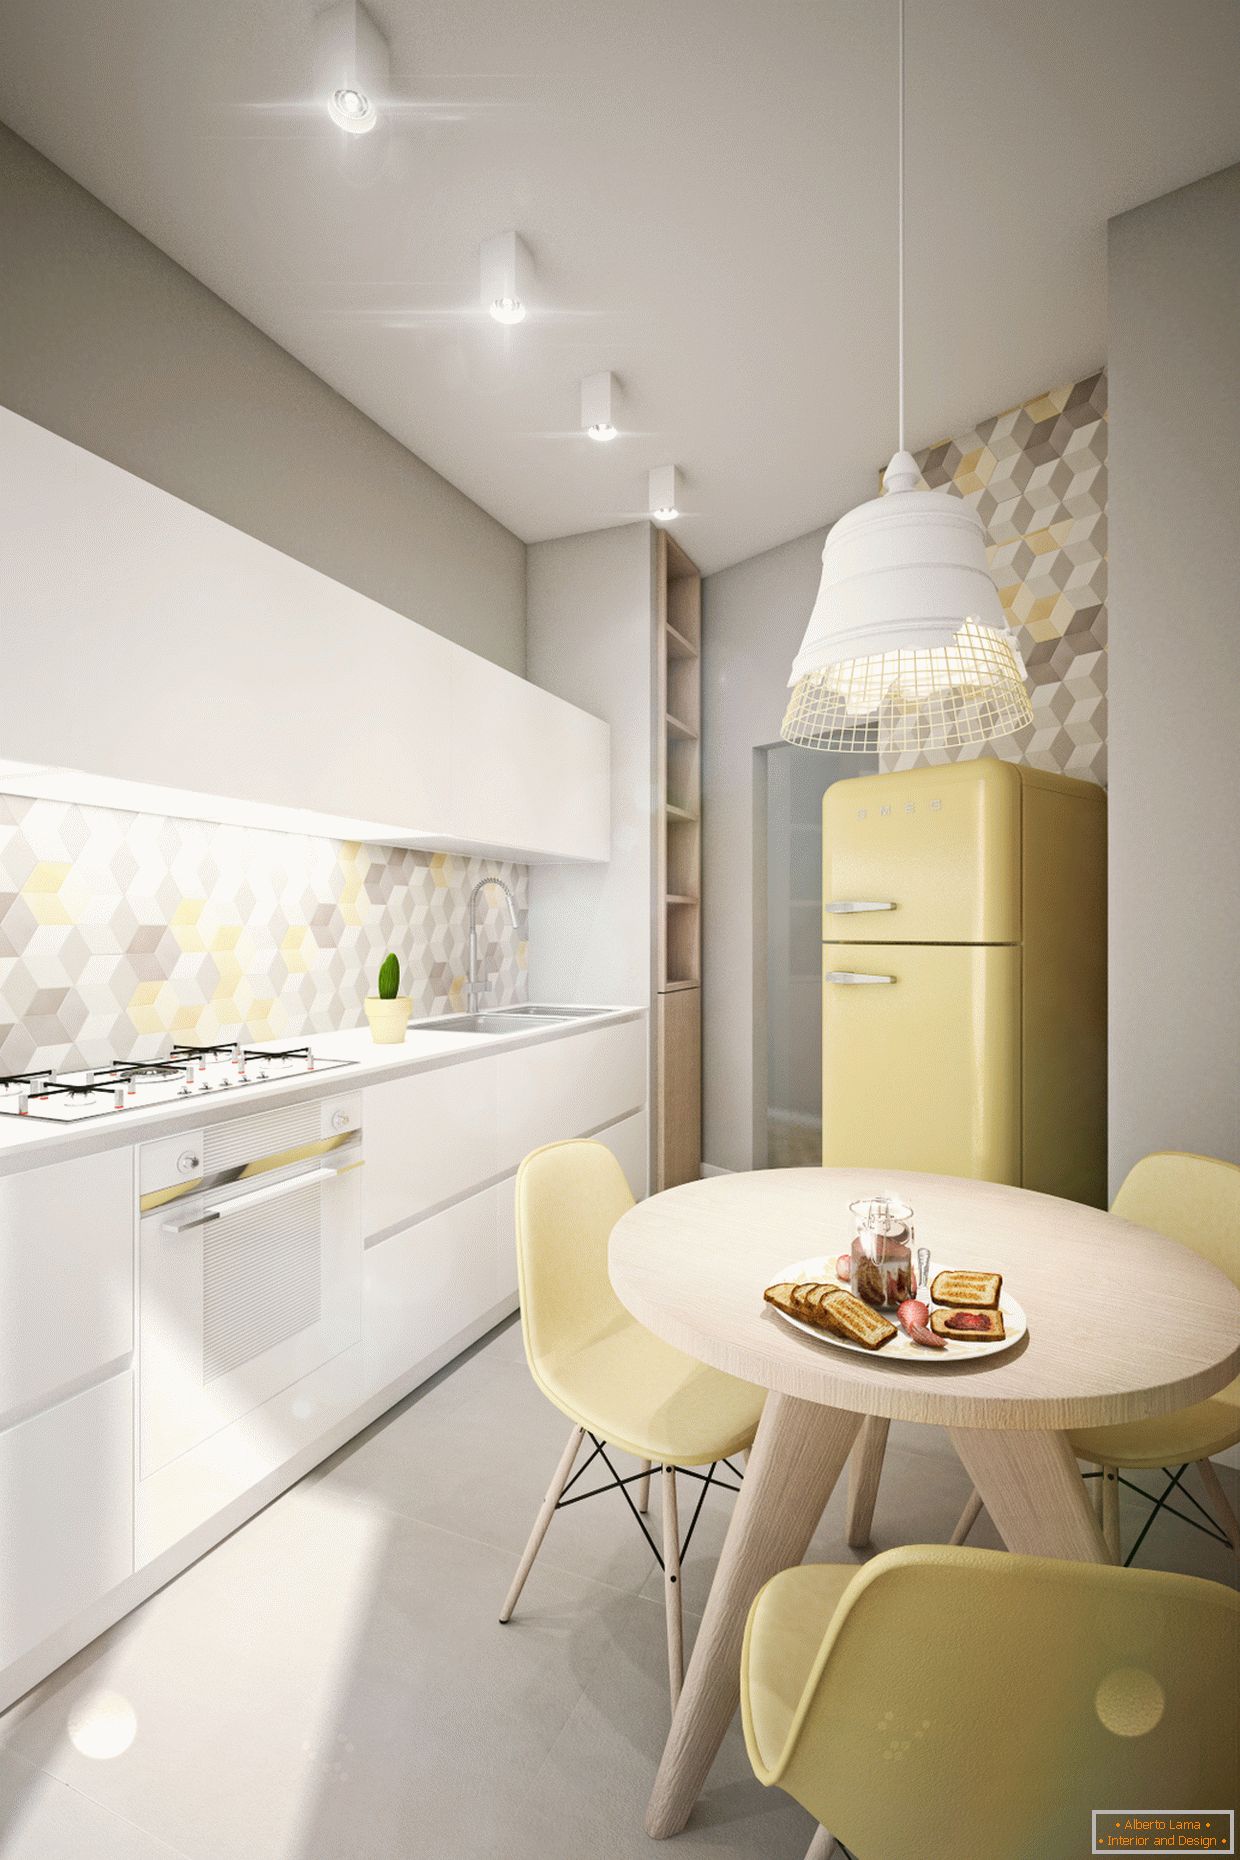 Dizajn apartman u pastelnim bojama: kuhinja